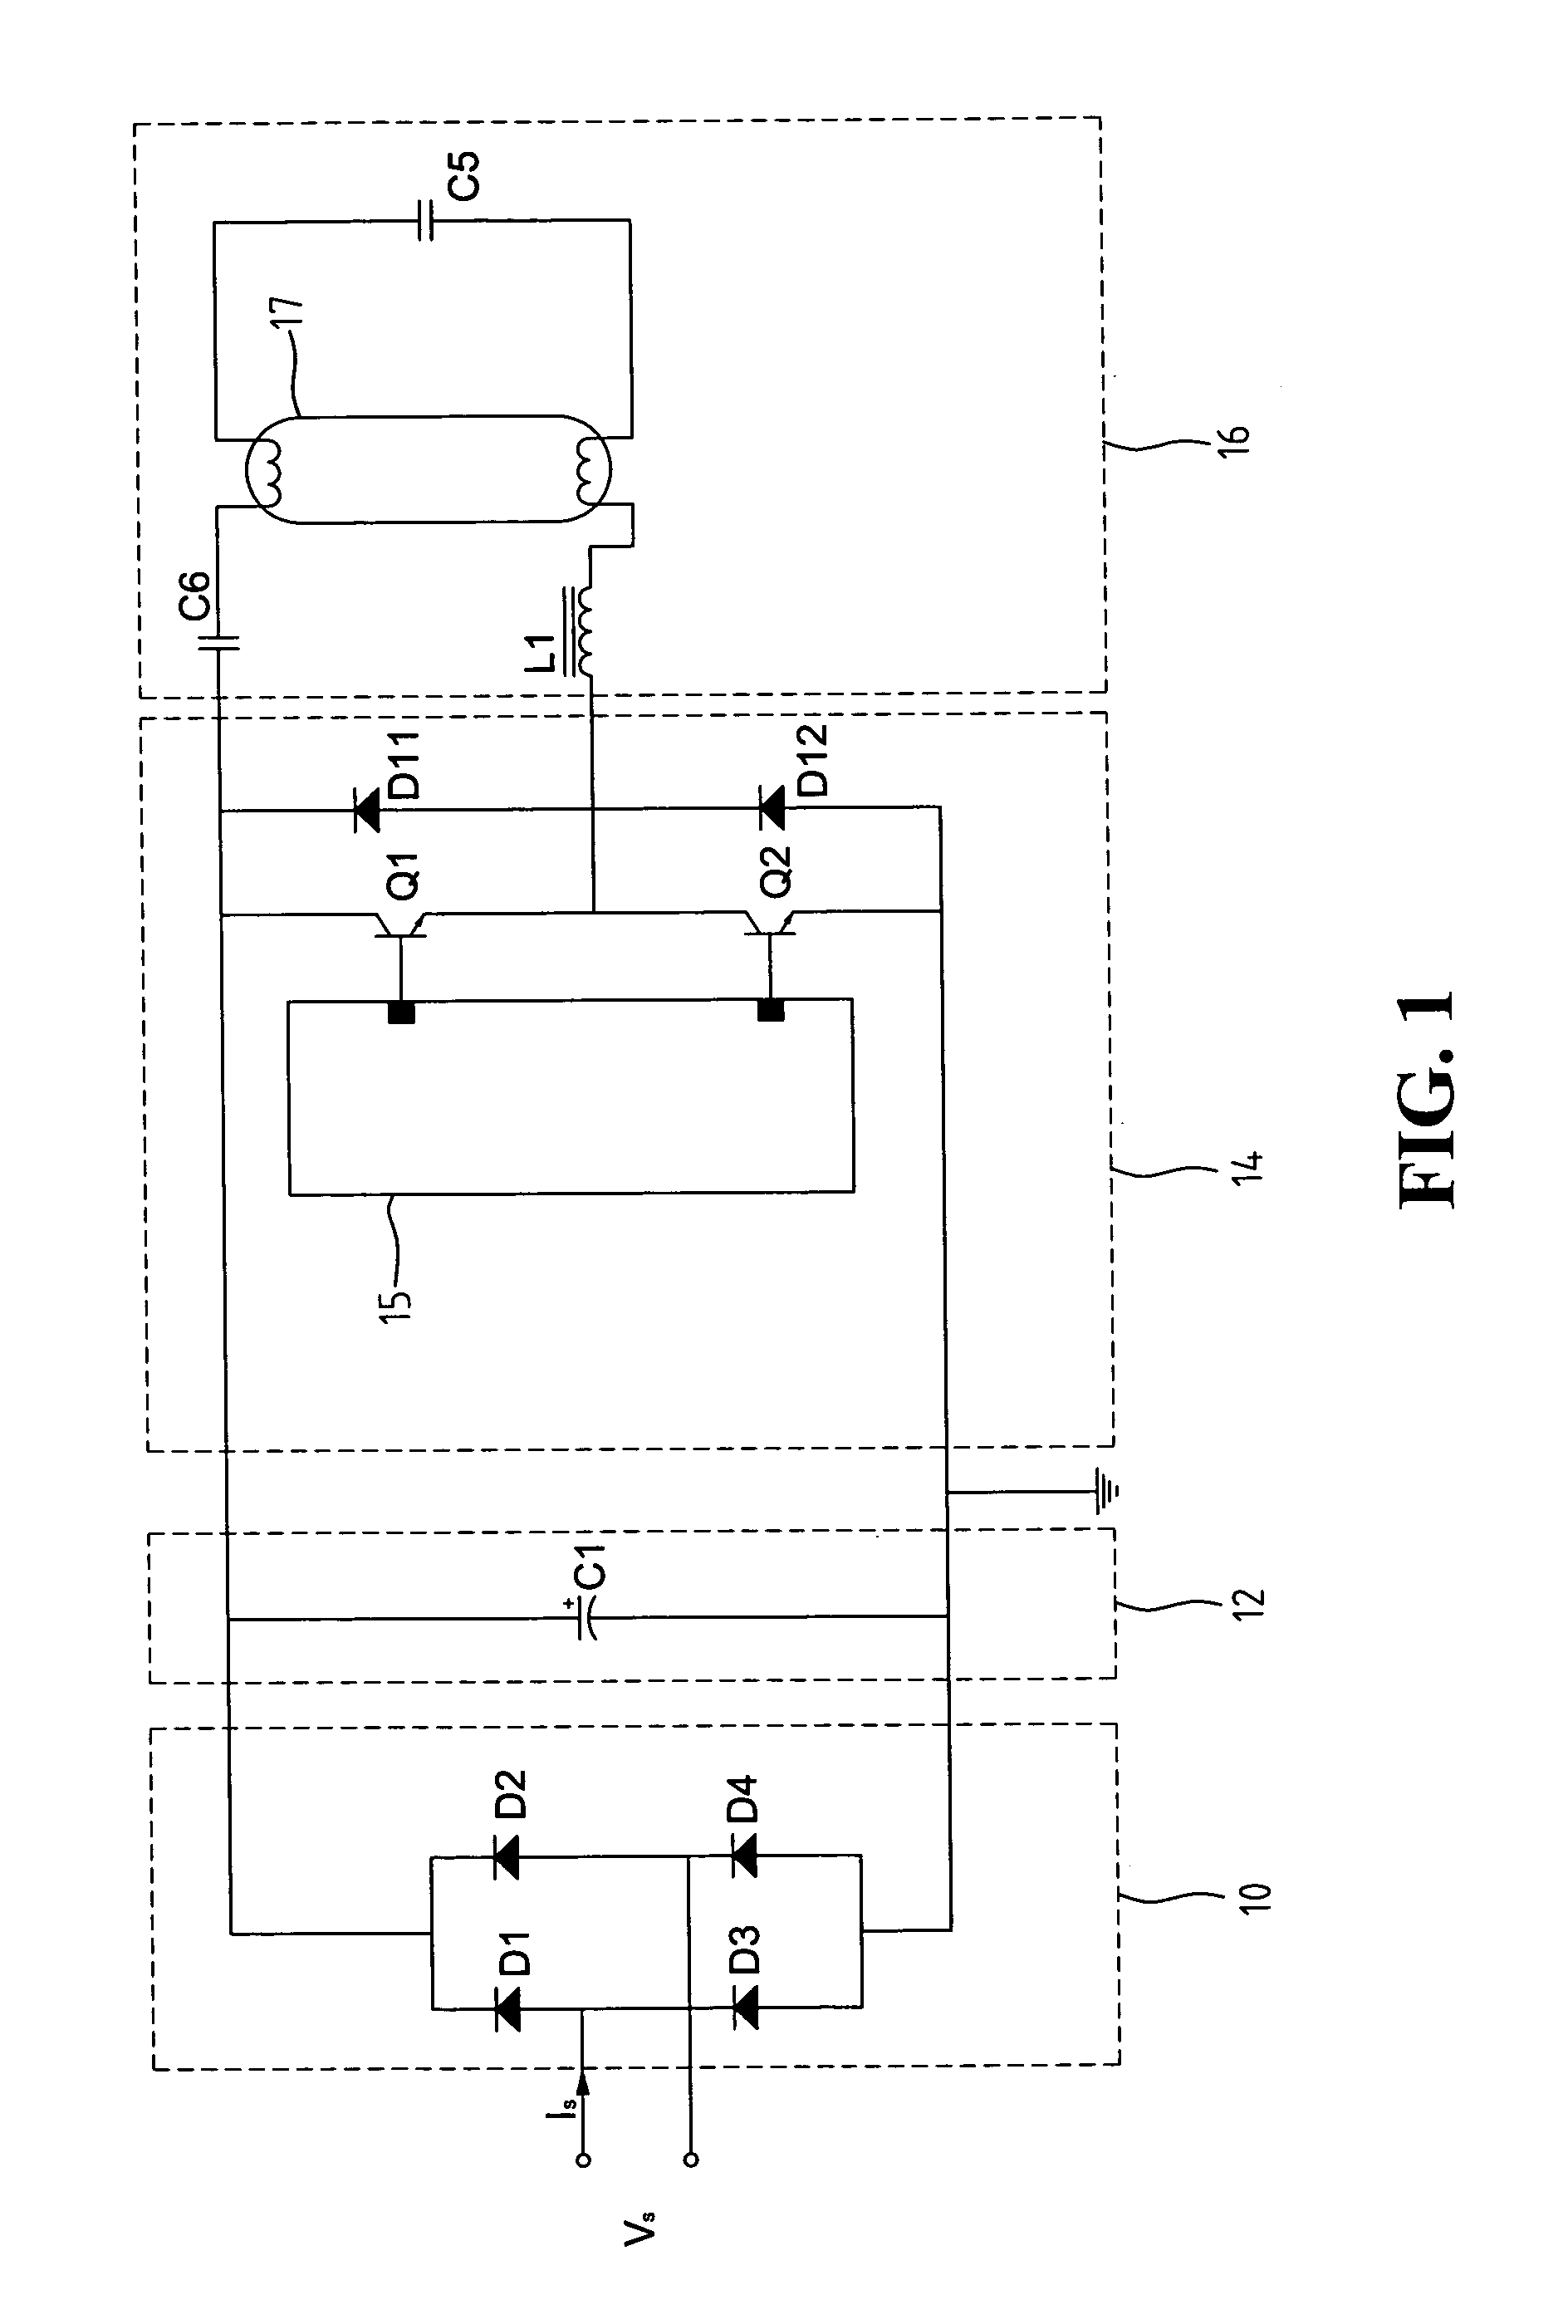 Power factor correction circuit for electronic ballast